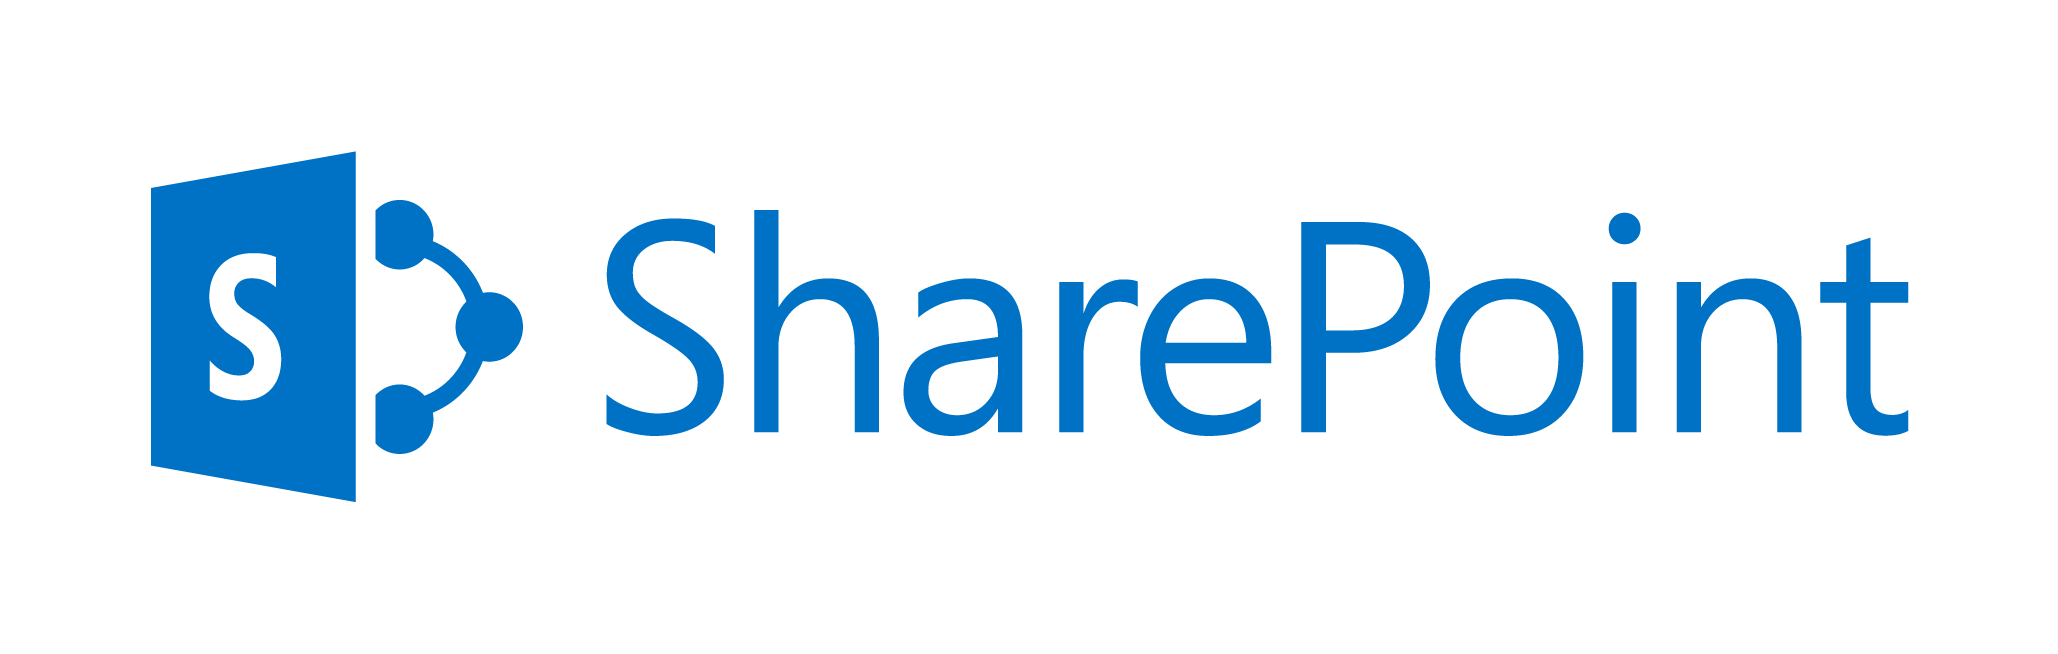 Microsoft Office Sharepoint Server